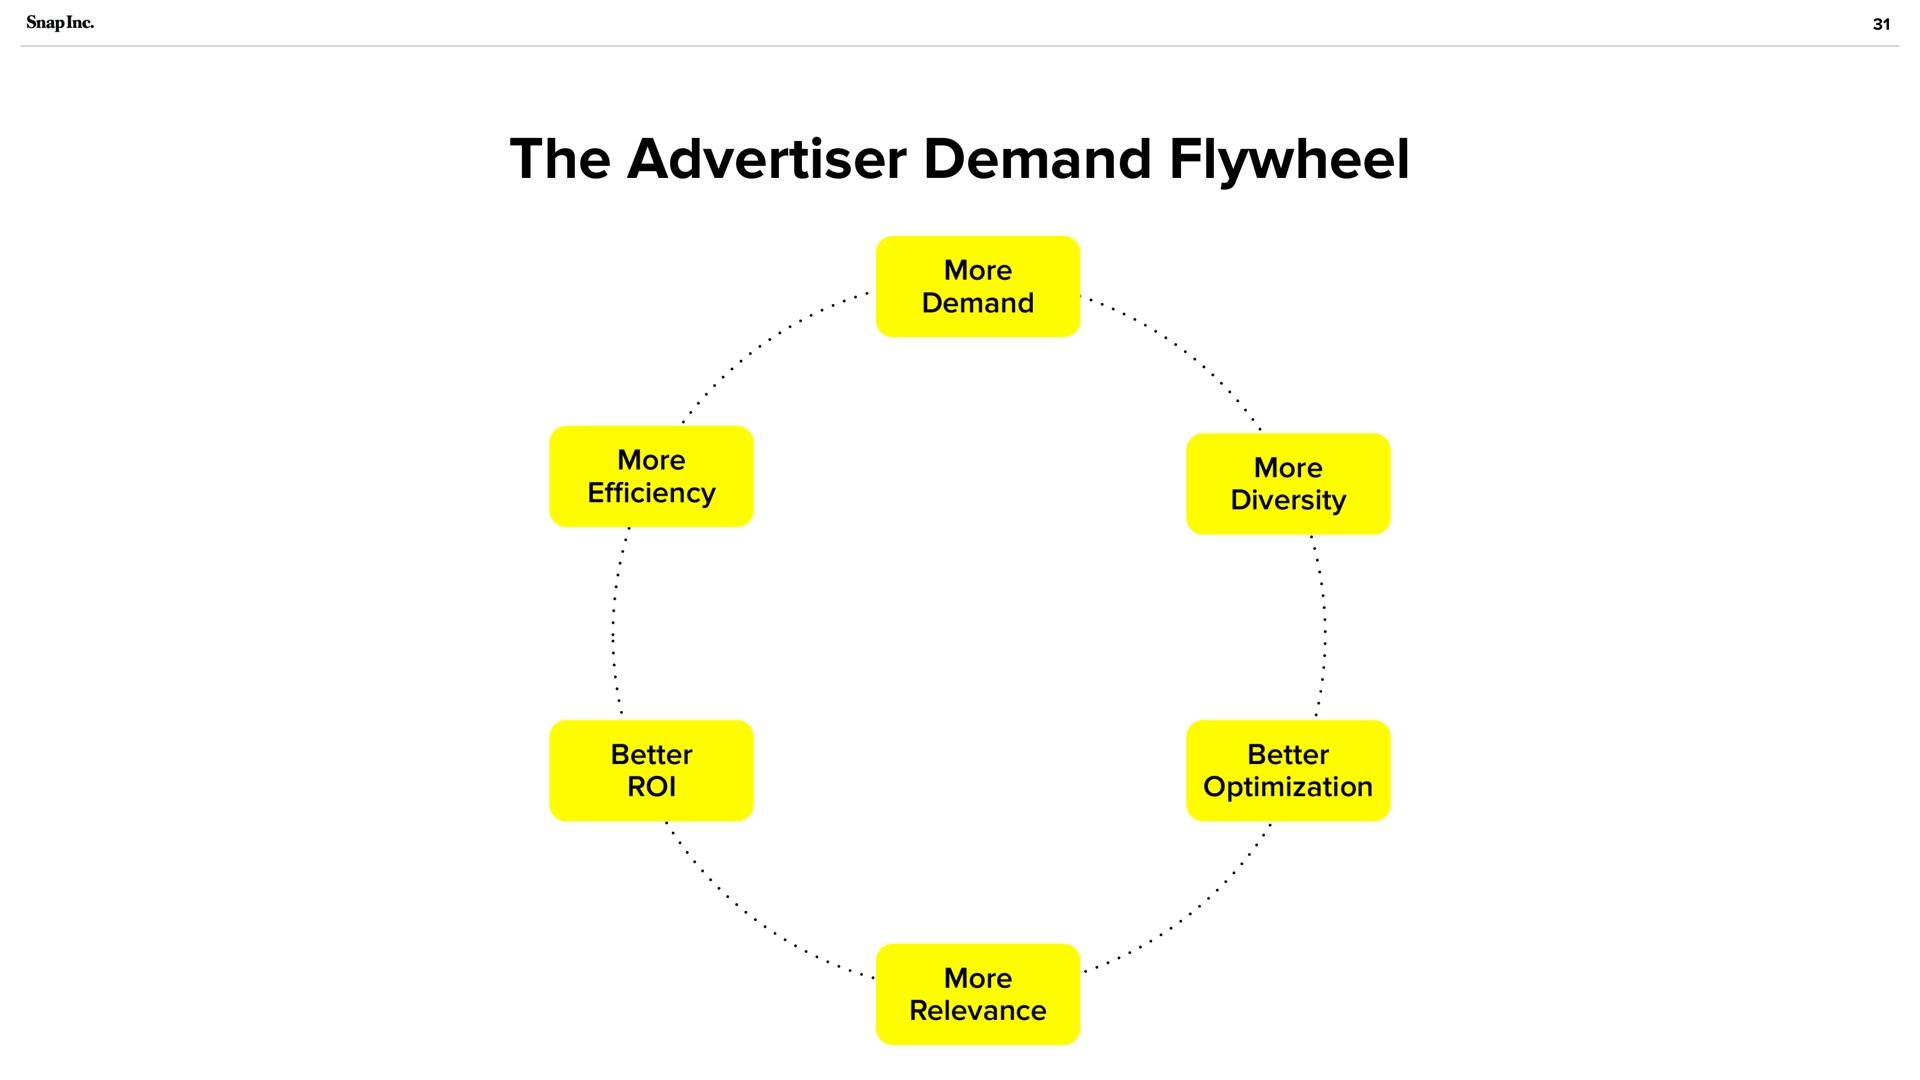 the advertiser demand flywheel | Snap Inc